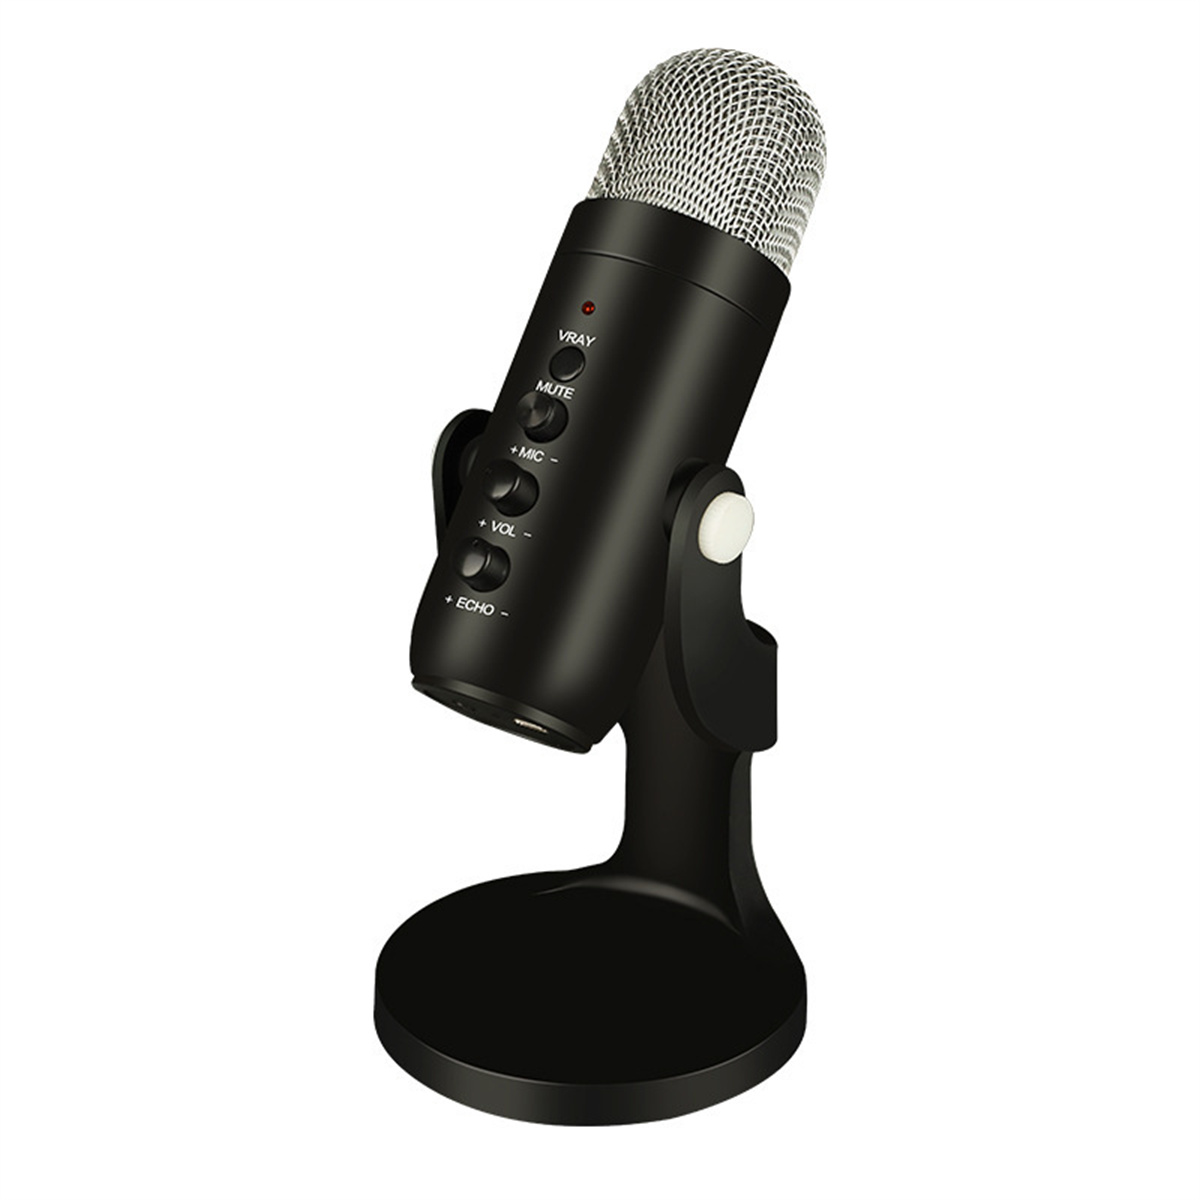 SYNTEK Kondensatormikrofon: Gaming, Live-Karaoke, Klangqualität silbrig Verlustfreie Mikrofon